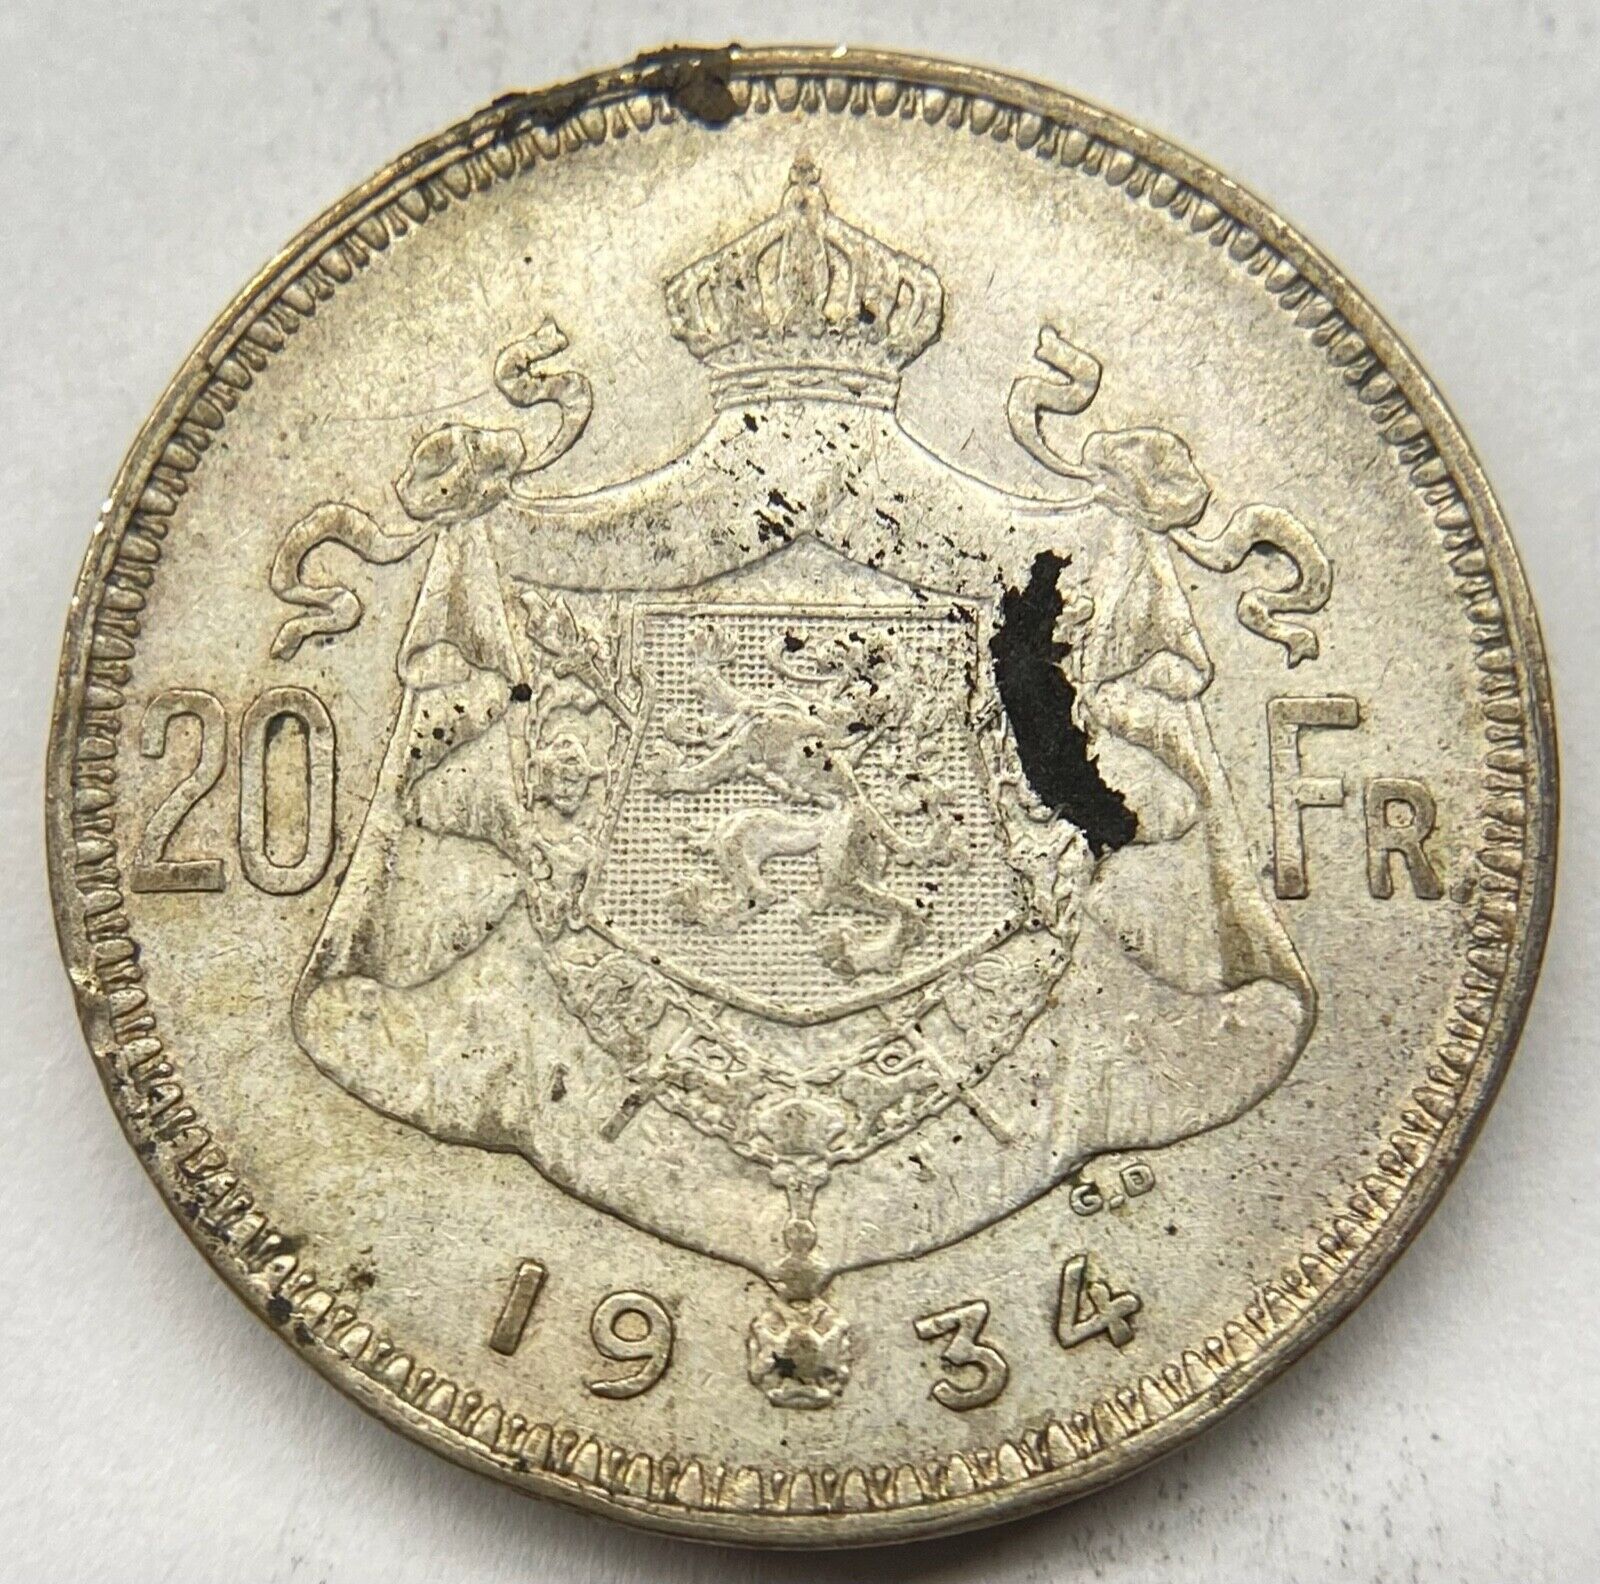 Belgium 1934 20 Francs Silver Coin KM #104.1